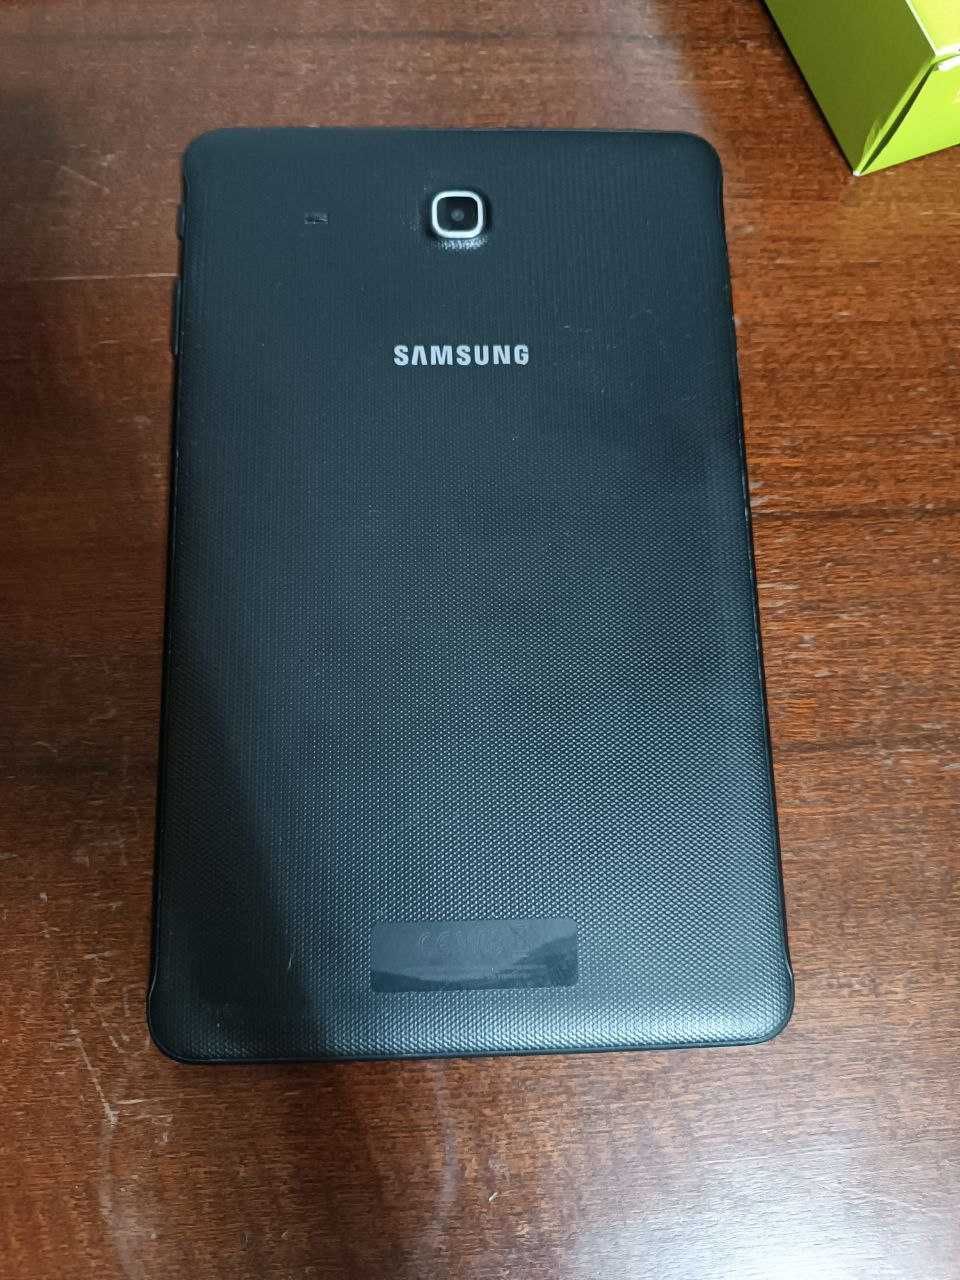 SAMSUNG Galaxy Tab E